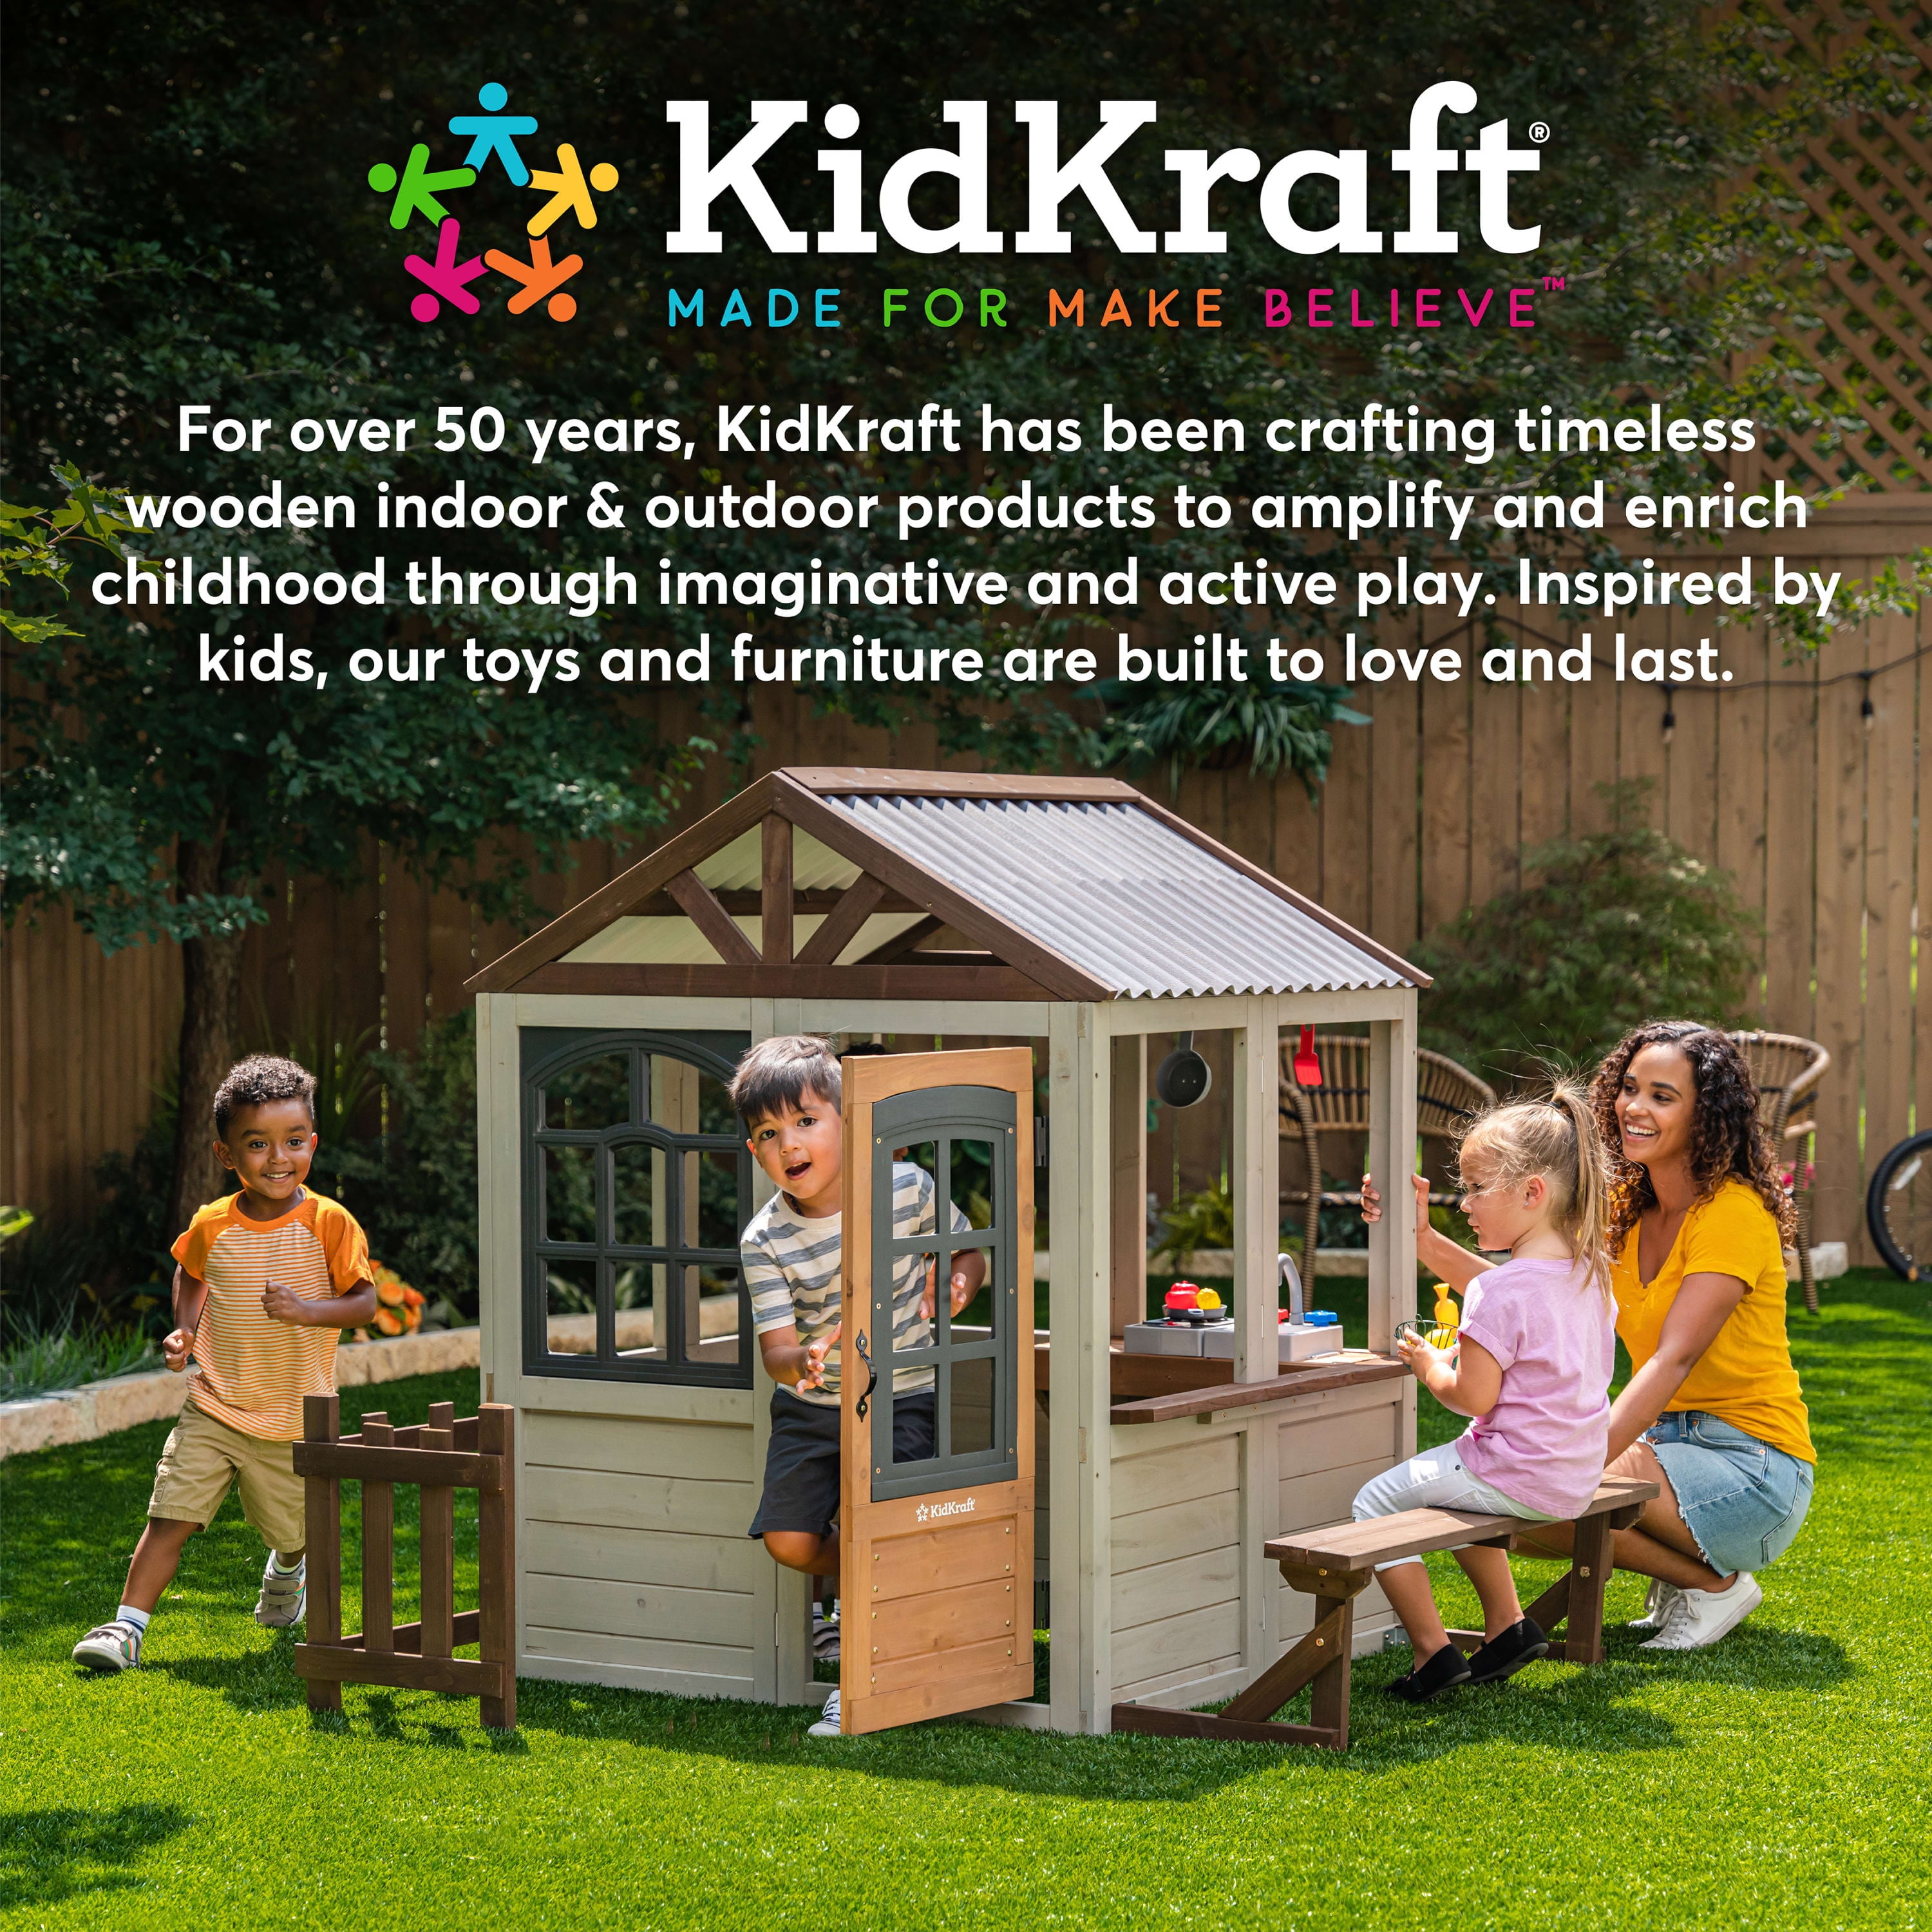 Play kitchen red - Toy kitchen red Kidkraft - New! - KinderSpell ®